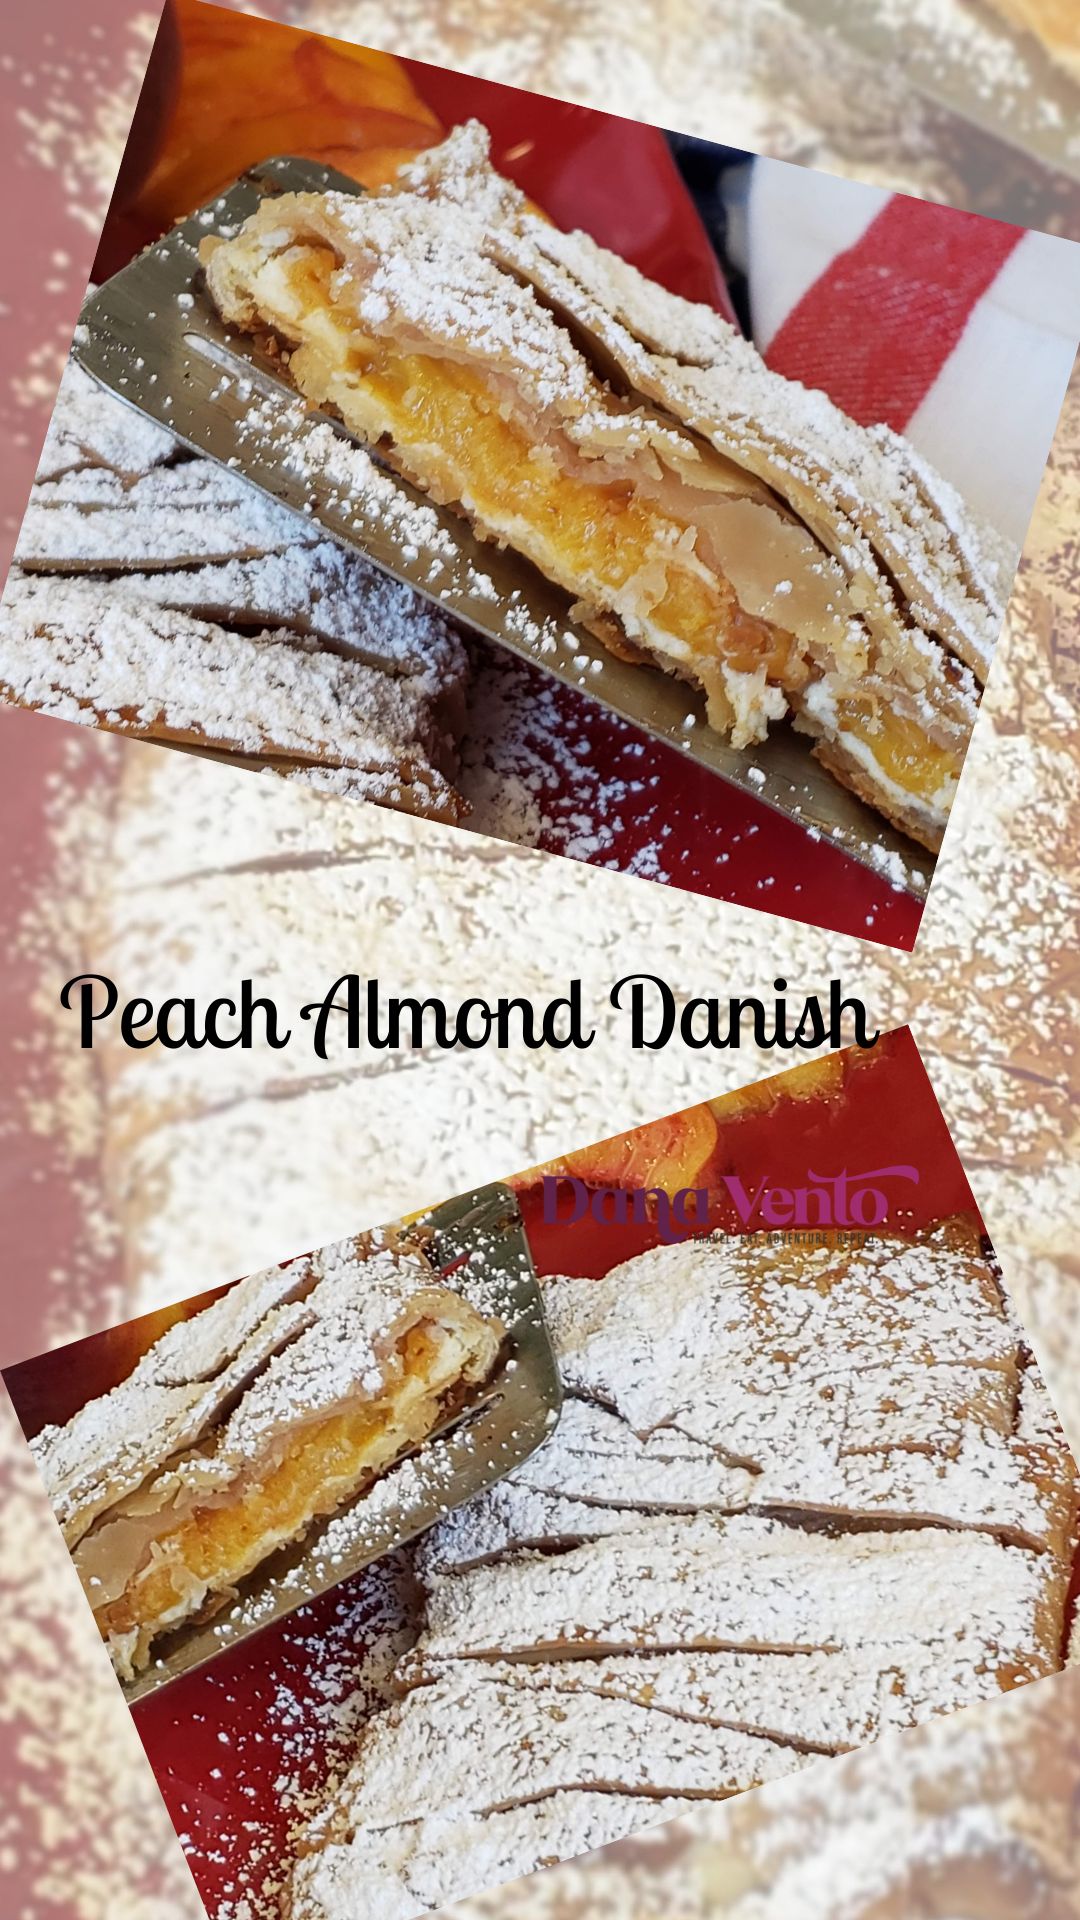 Peach Almond Danish